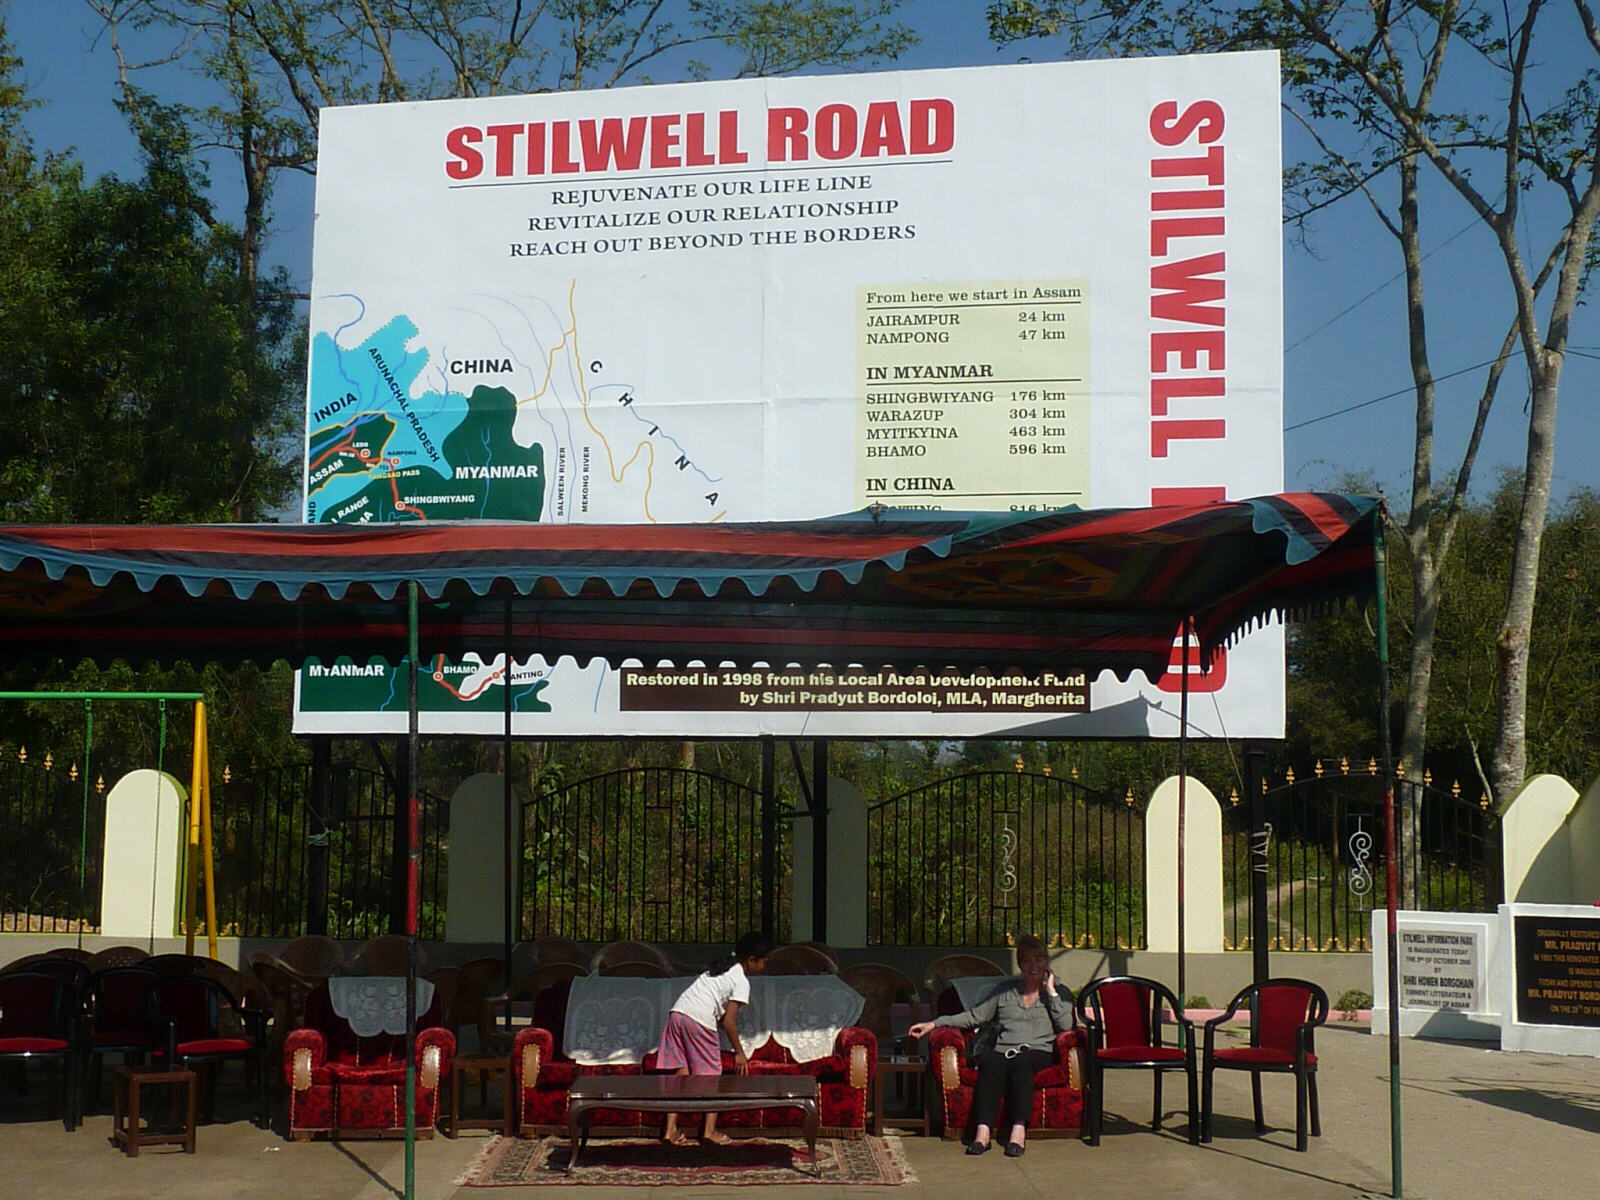 Stilwell Road Park, Burma Road in Ledo, Assam, India